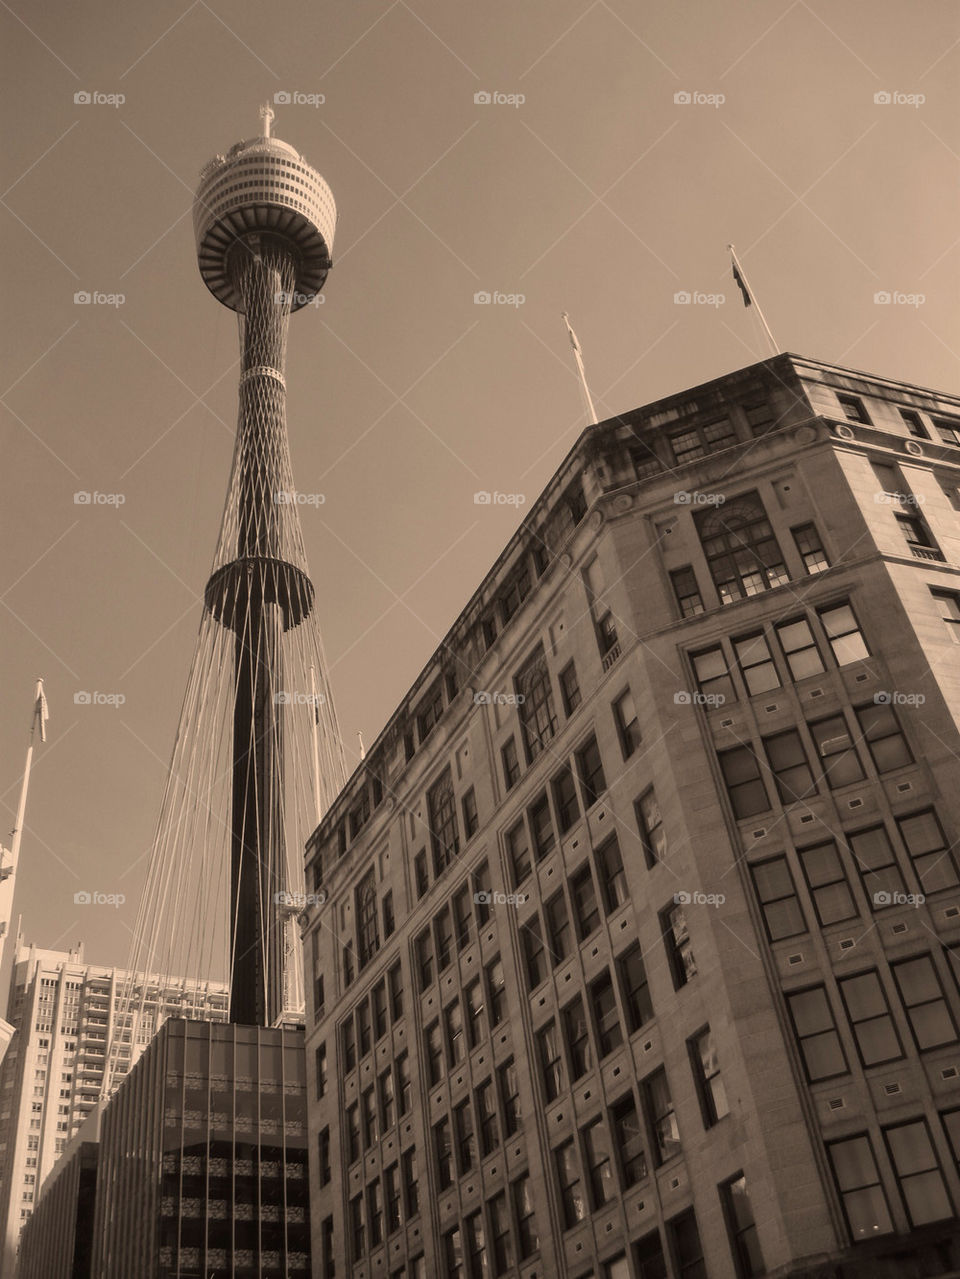 city building tower australia by splicanka